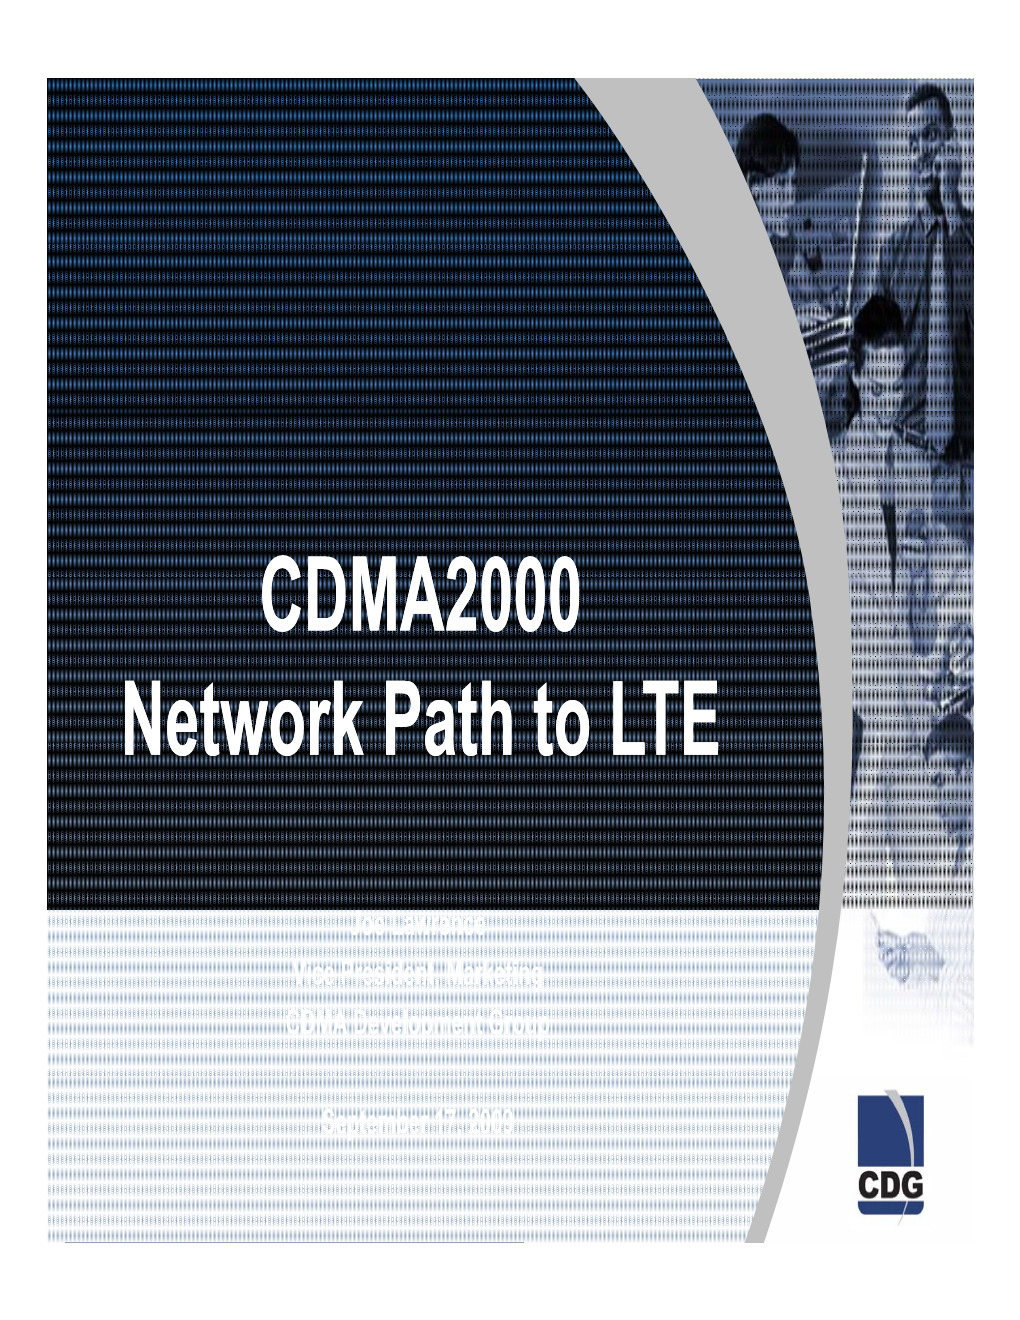 CDMA2000 Network Path to LTE